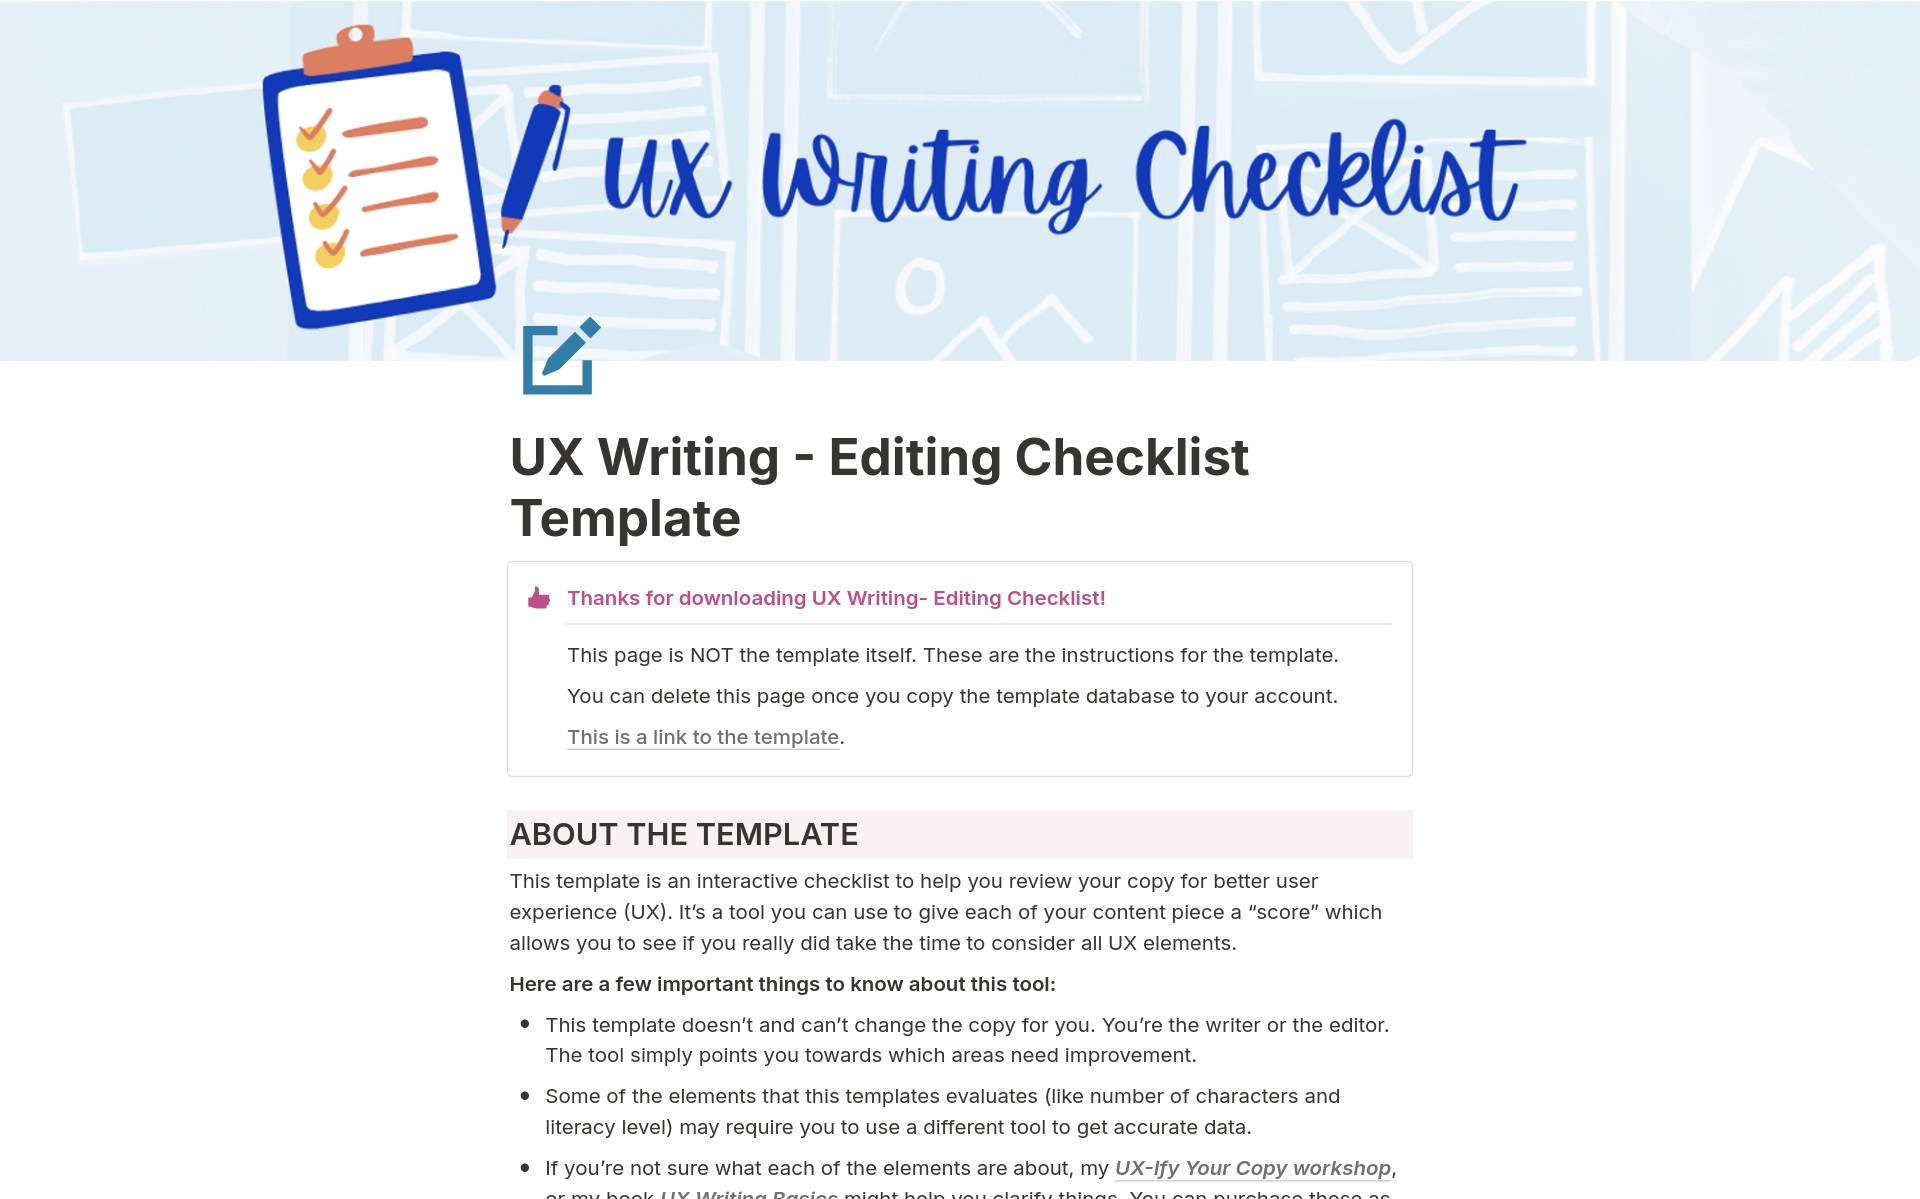 Aperçu du modèle de UX Writing - Editing Checklist